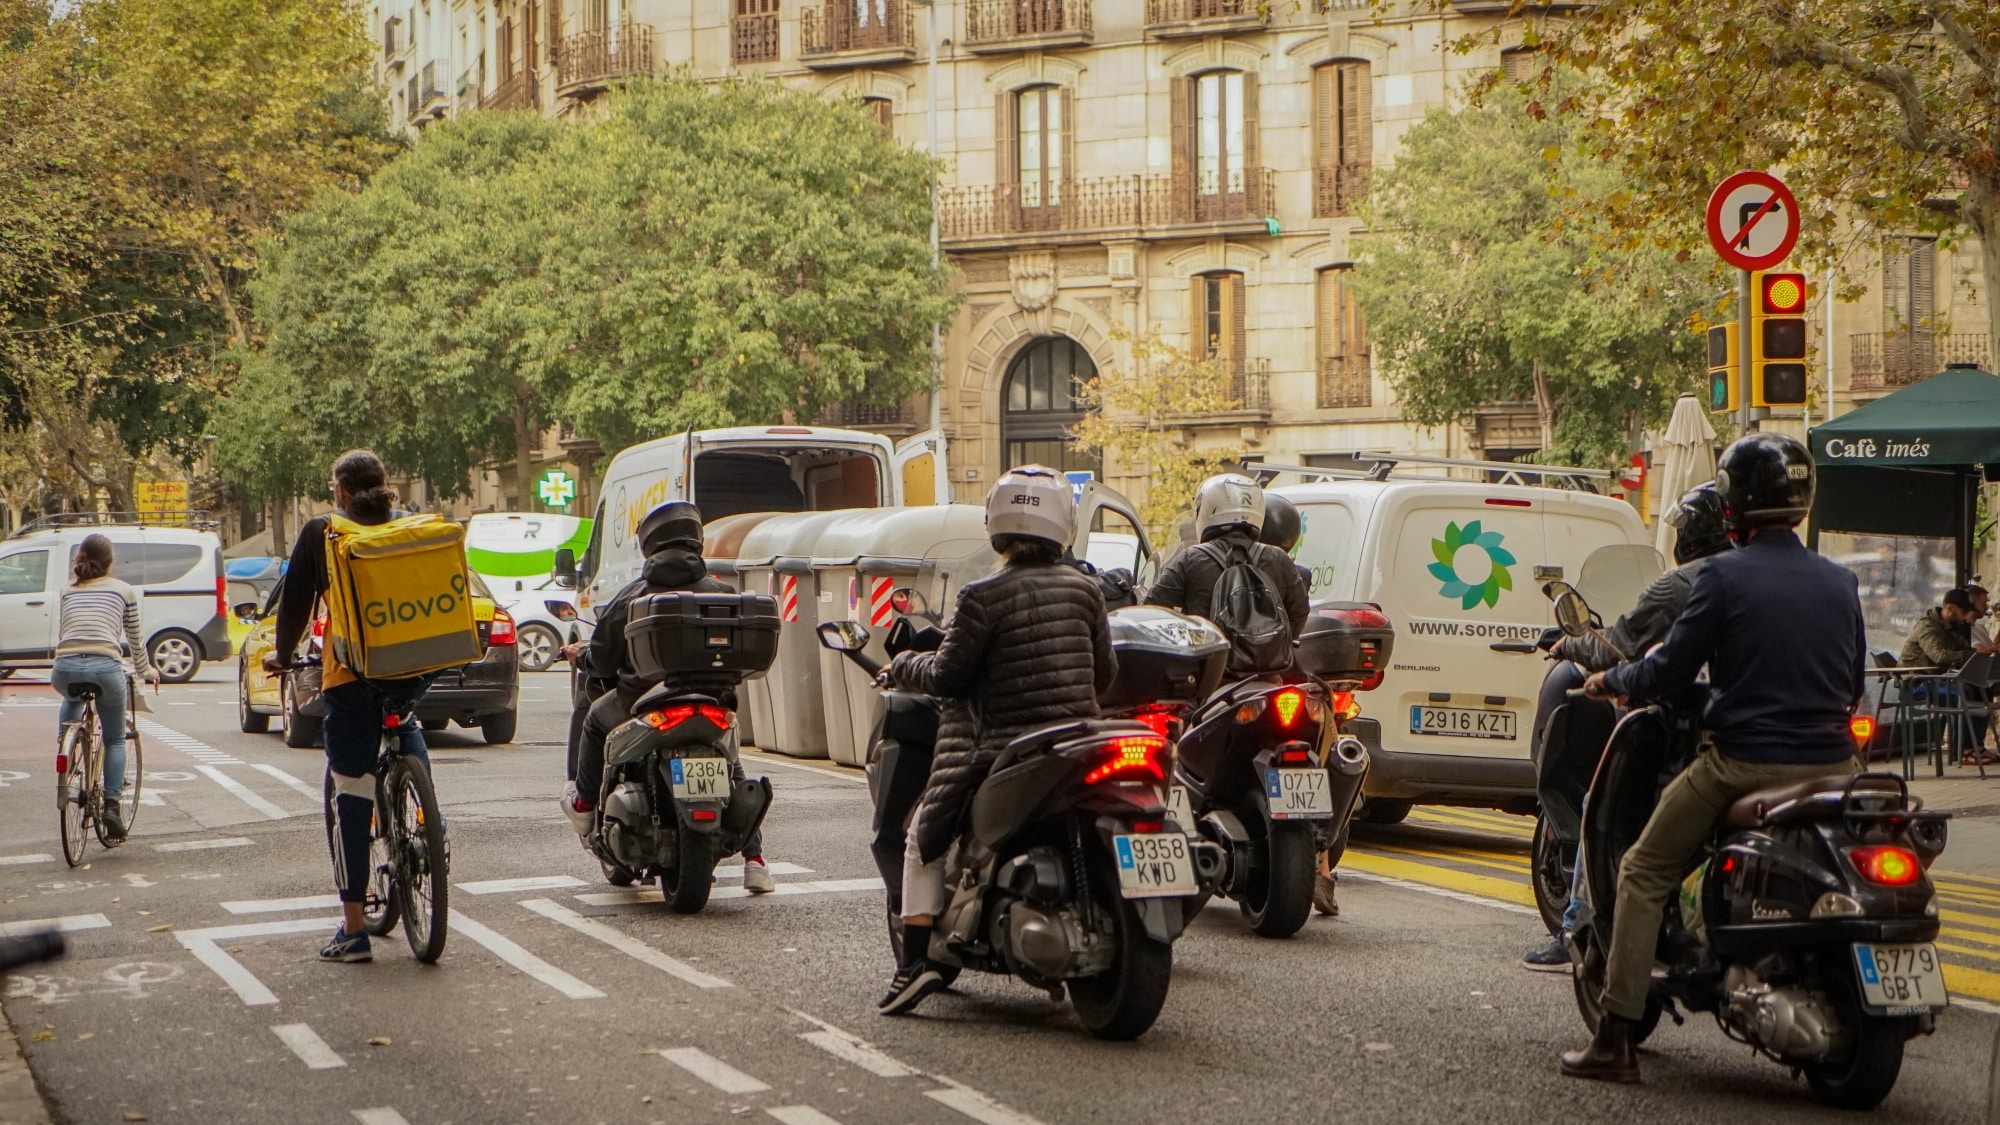 Rue circulation motos velos route trafic Barcelone Photo Clementine Laurent Equinox 11 1